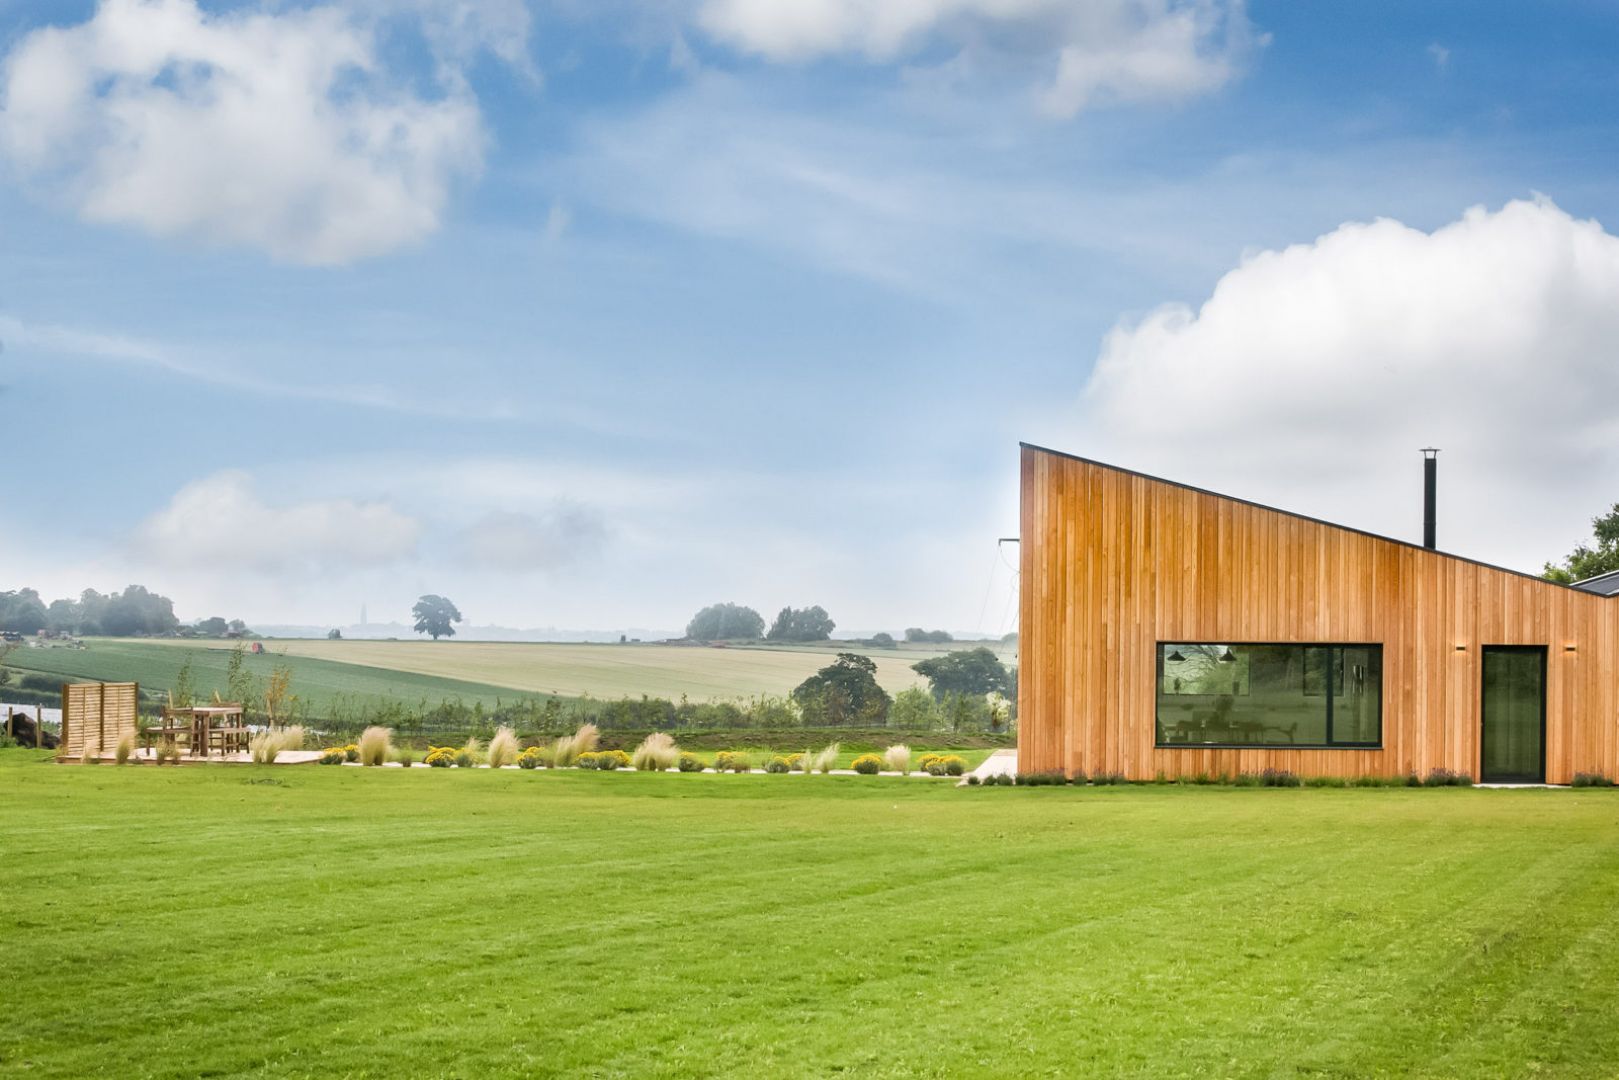 Architekt: Andrew Hughes. Fot. The Modern House